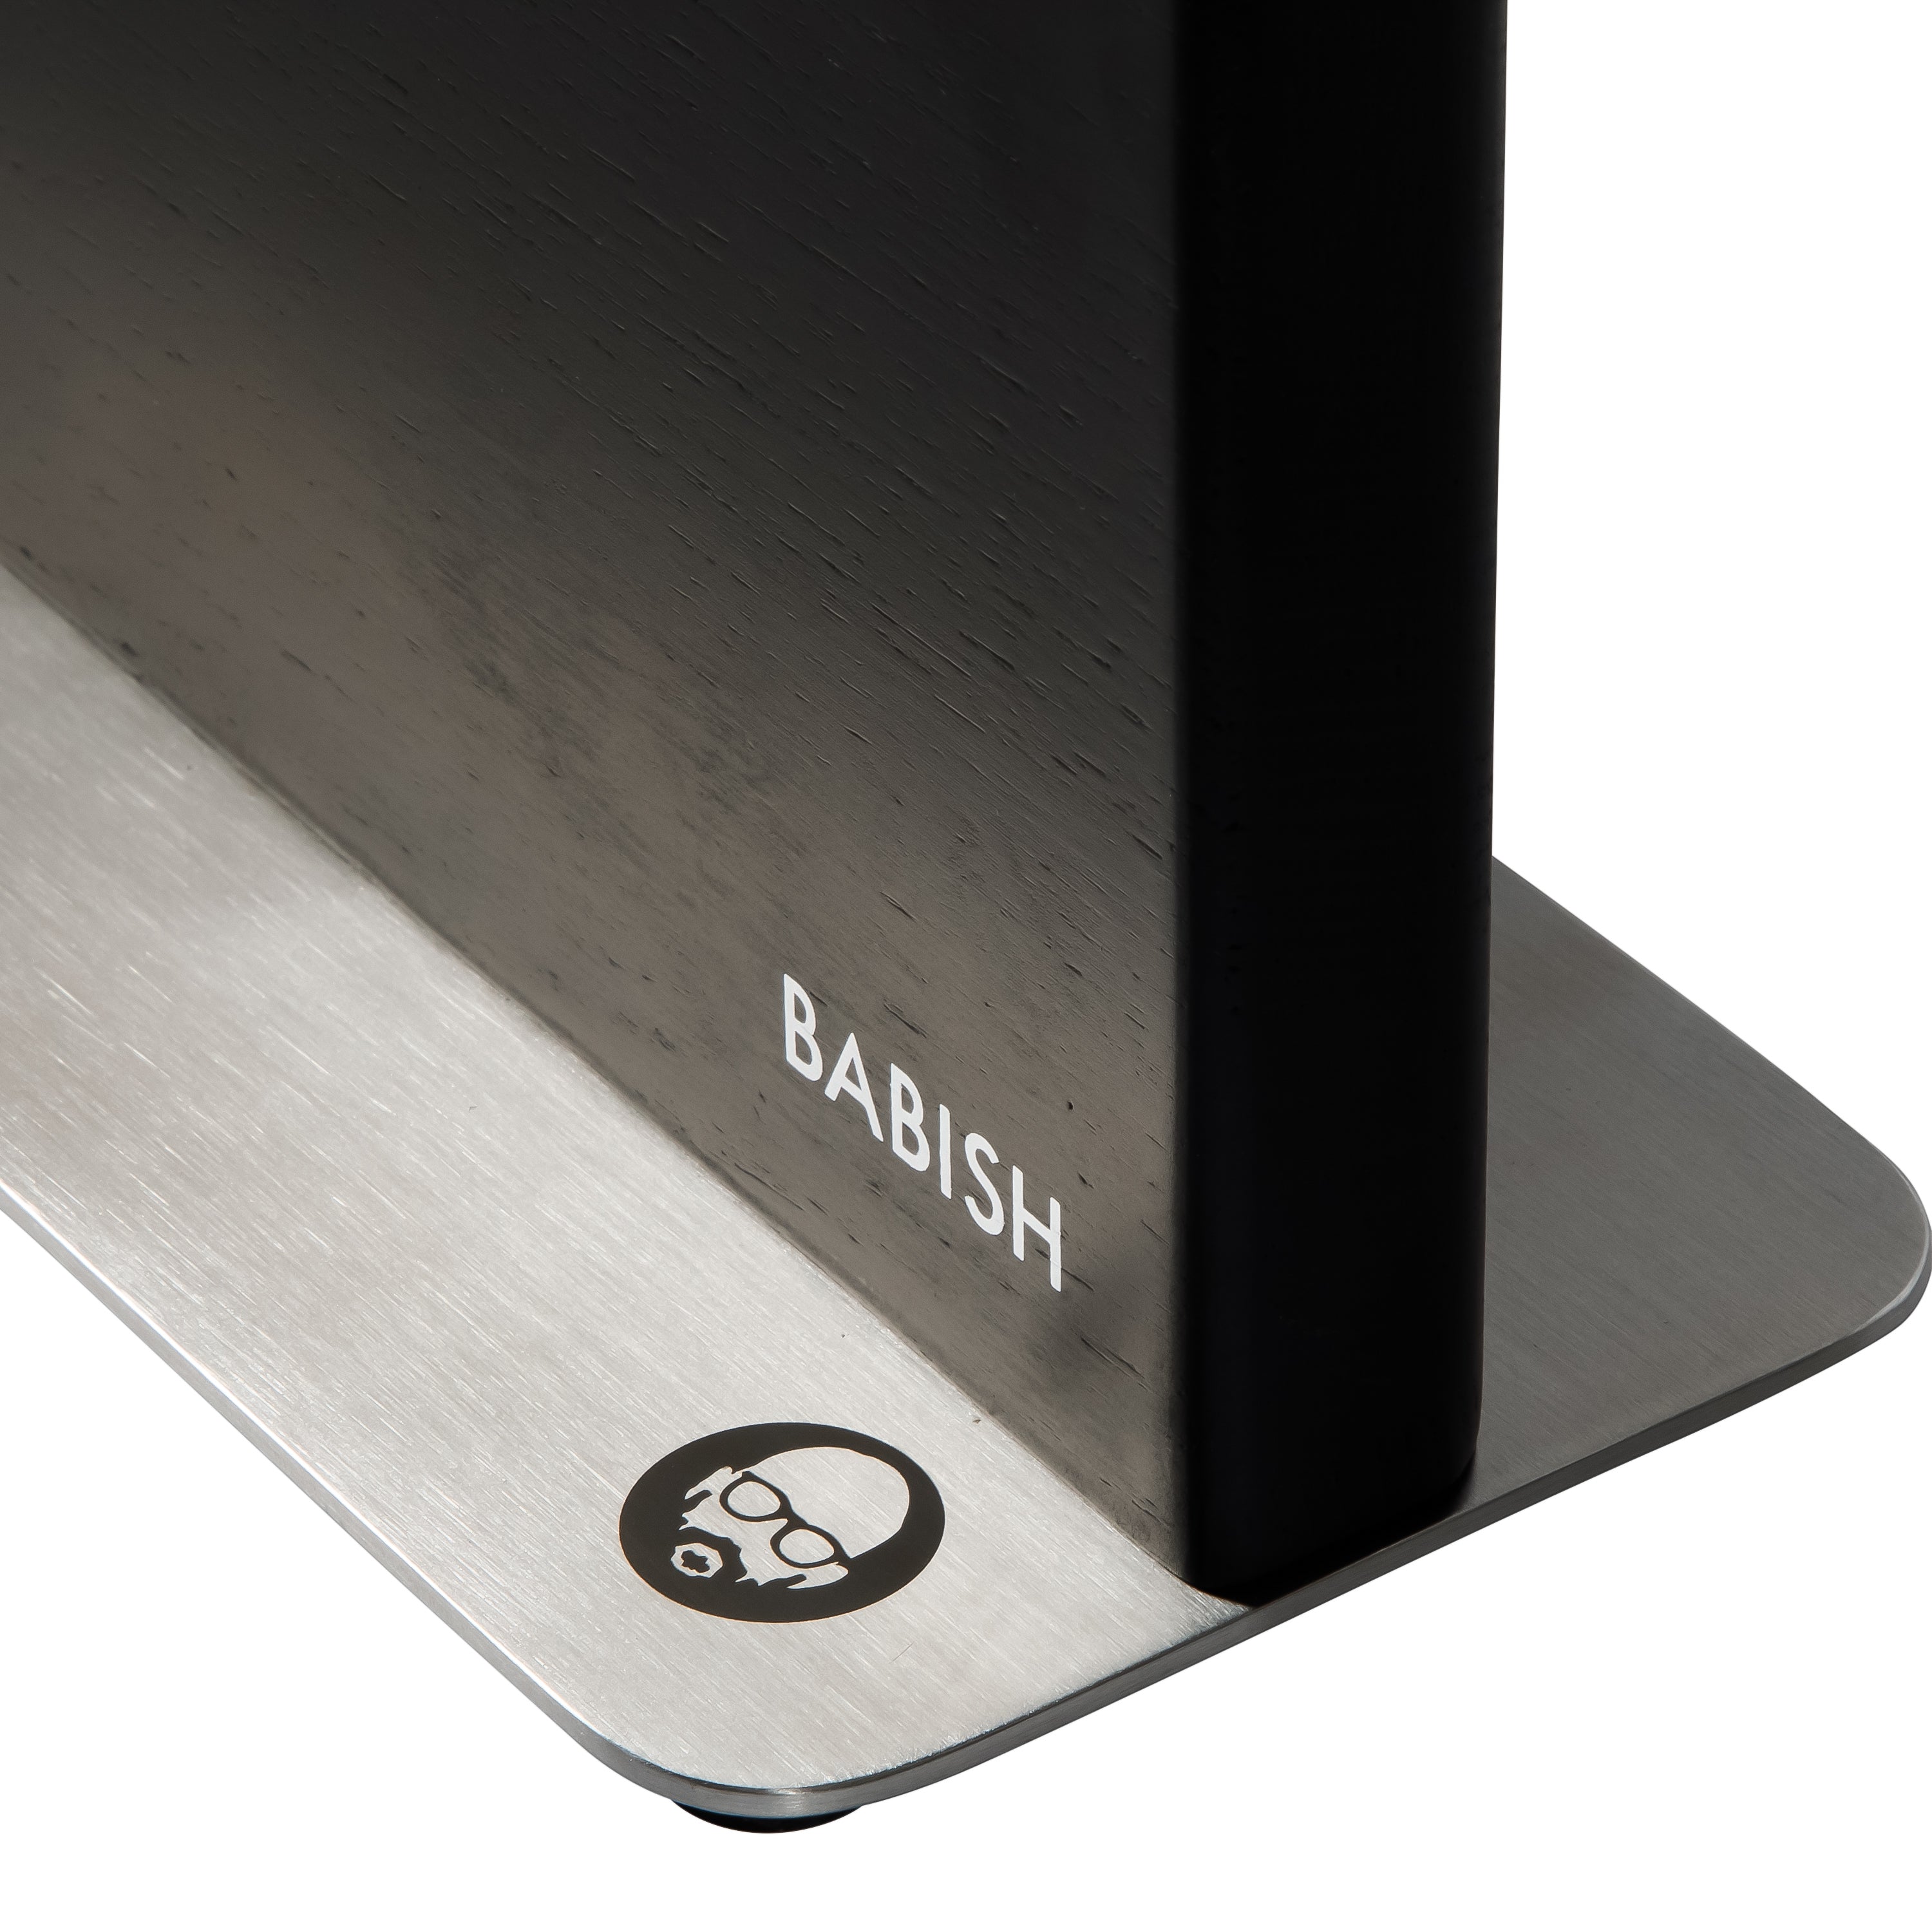 Babish 5 Piece 1.4116 German Steel Magnetic Forged Kitchen Knife Block Set